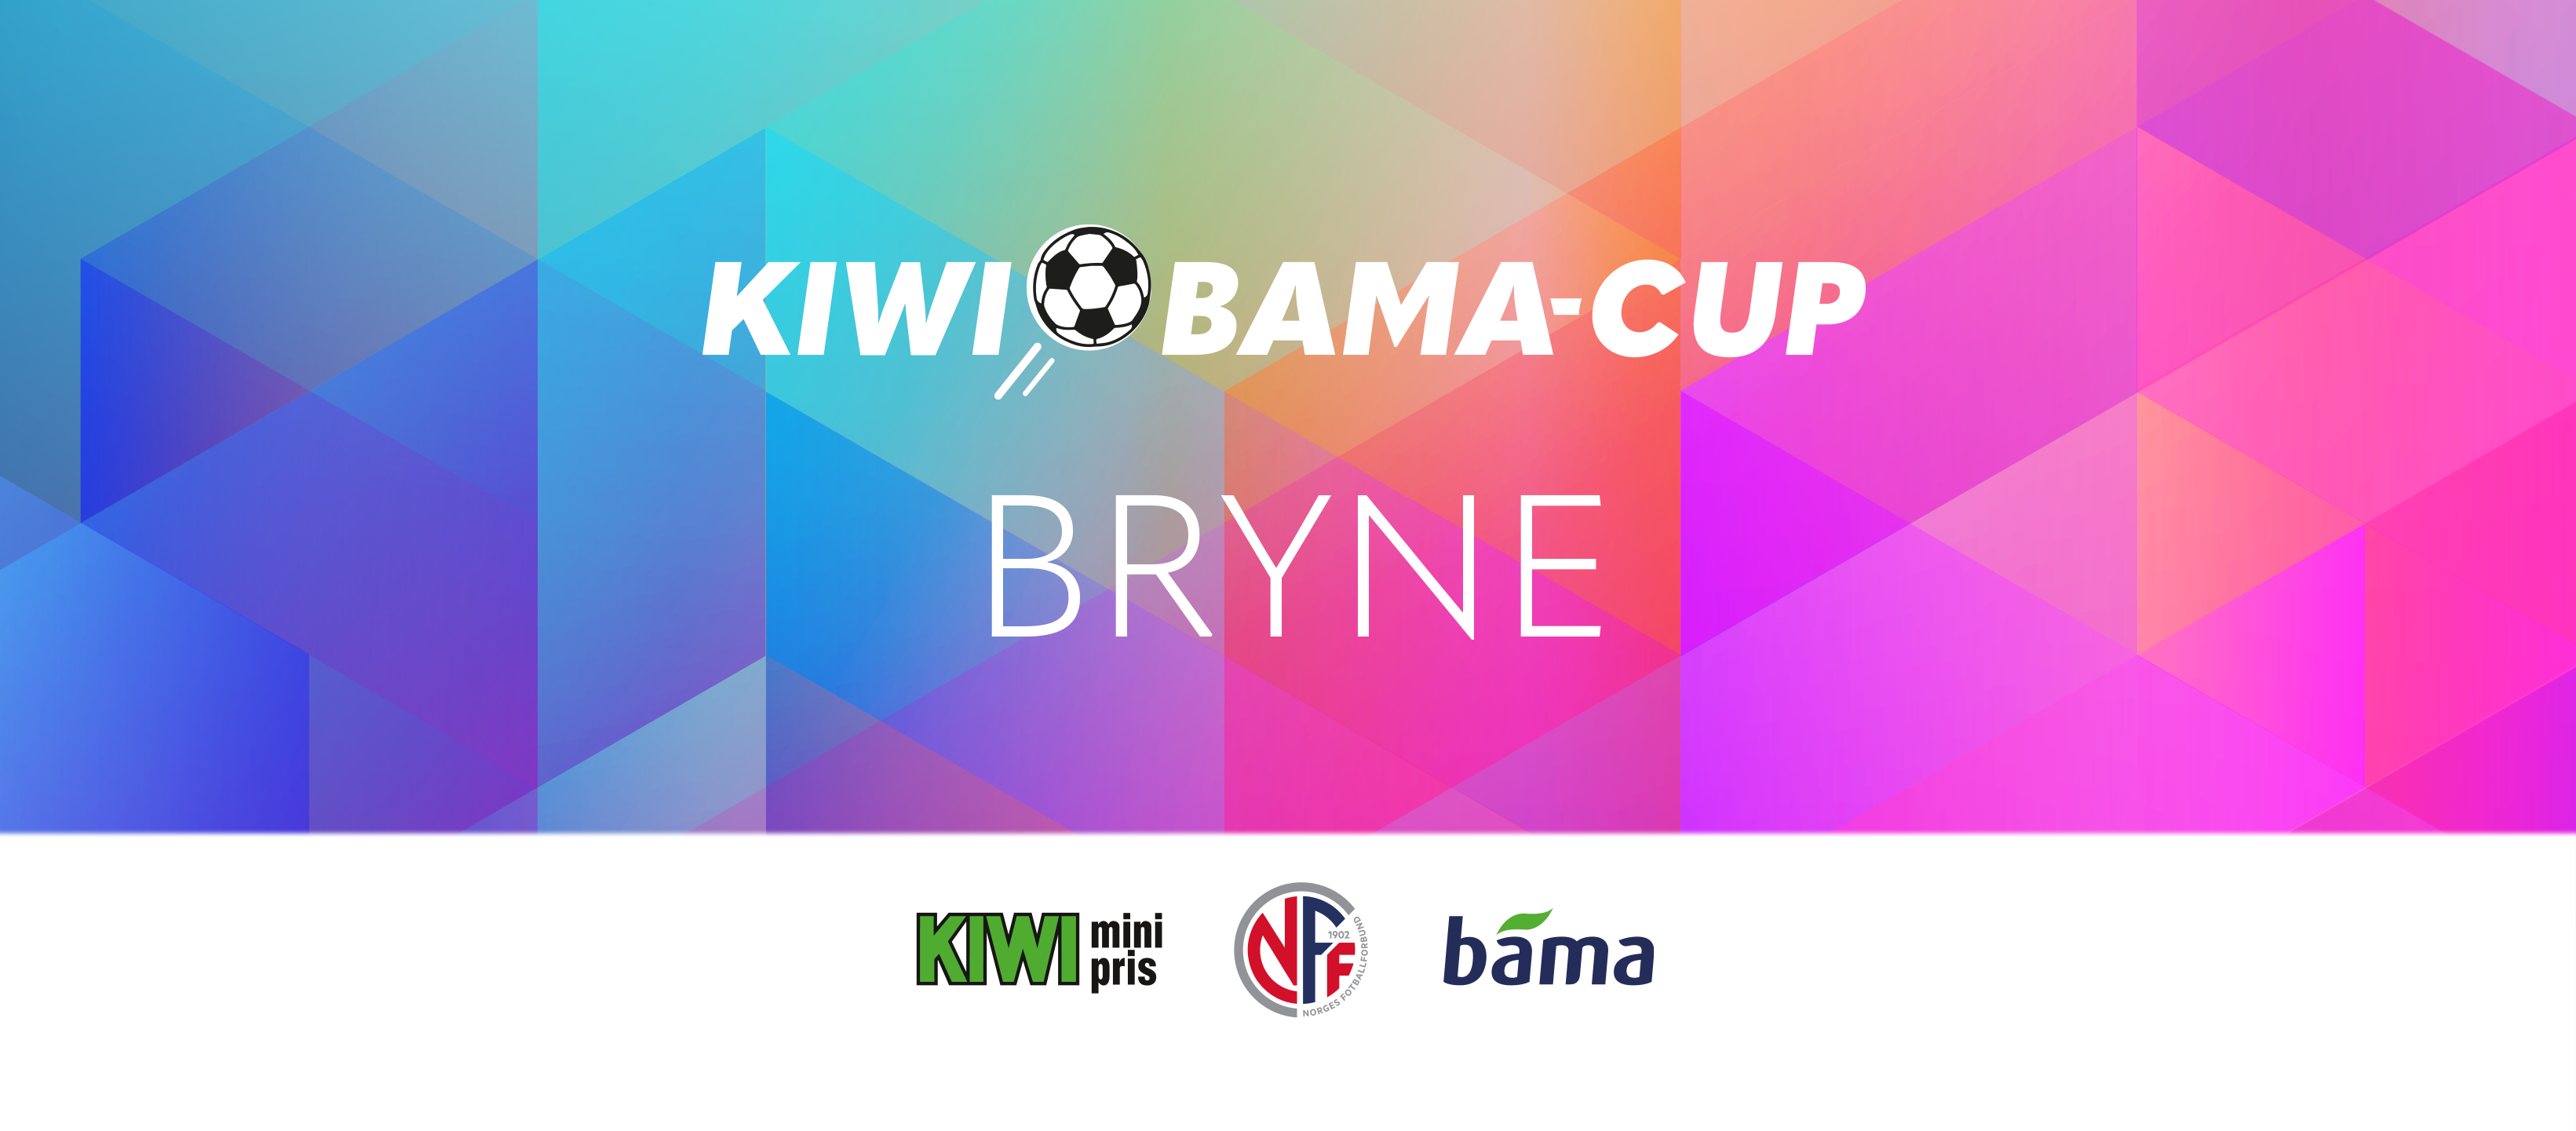 FB-BANNER KIWI-BAMA-Cup - Bryne.png